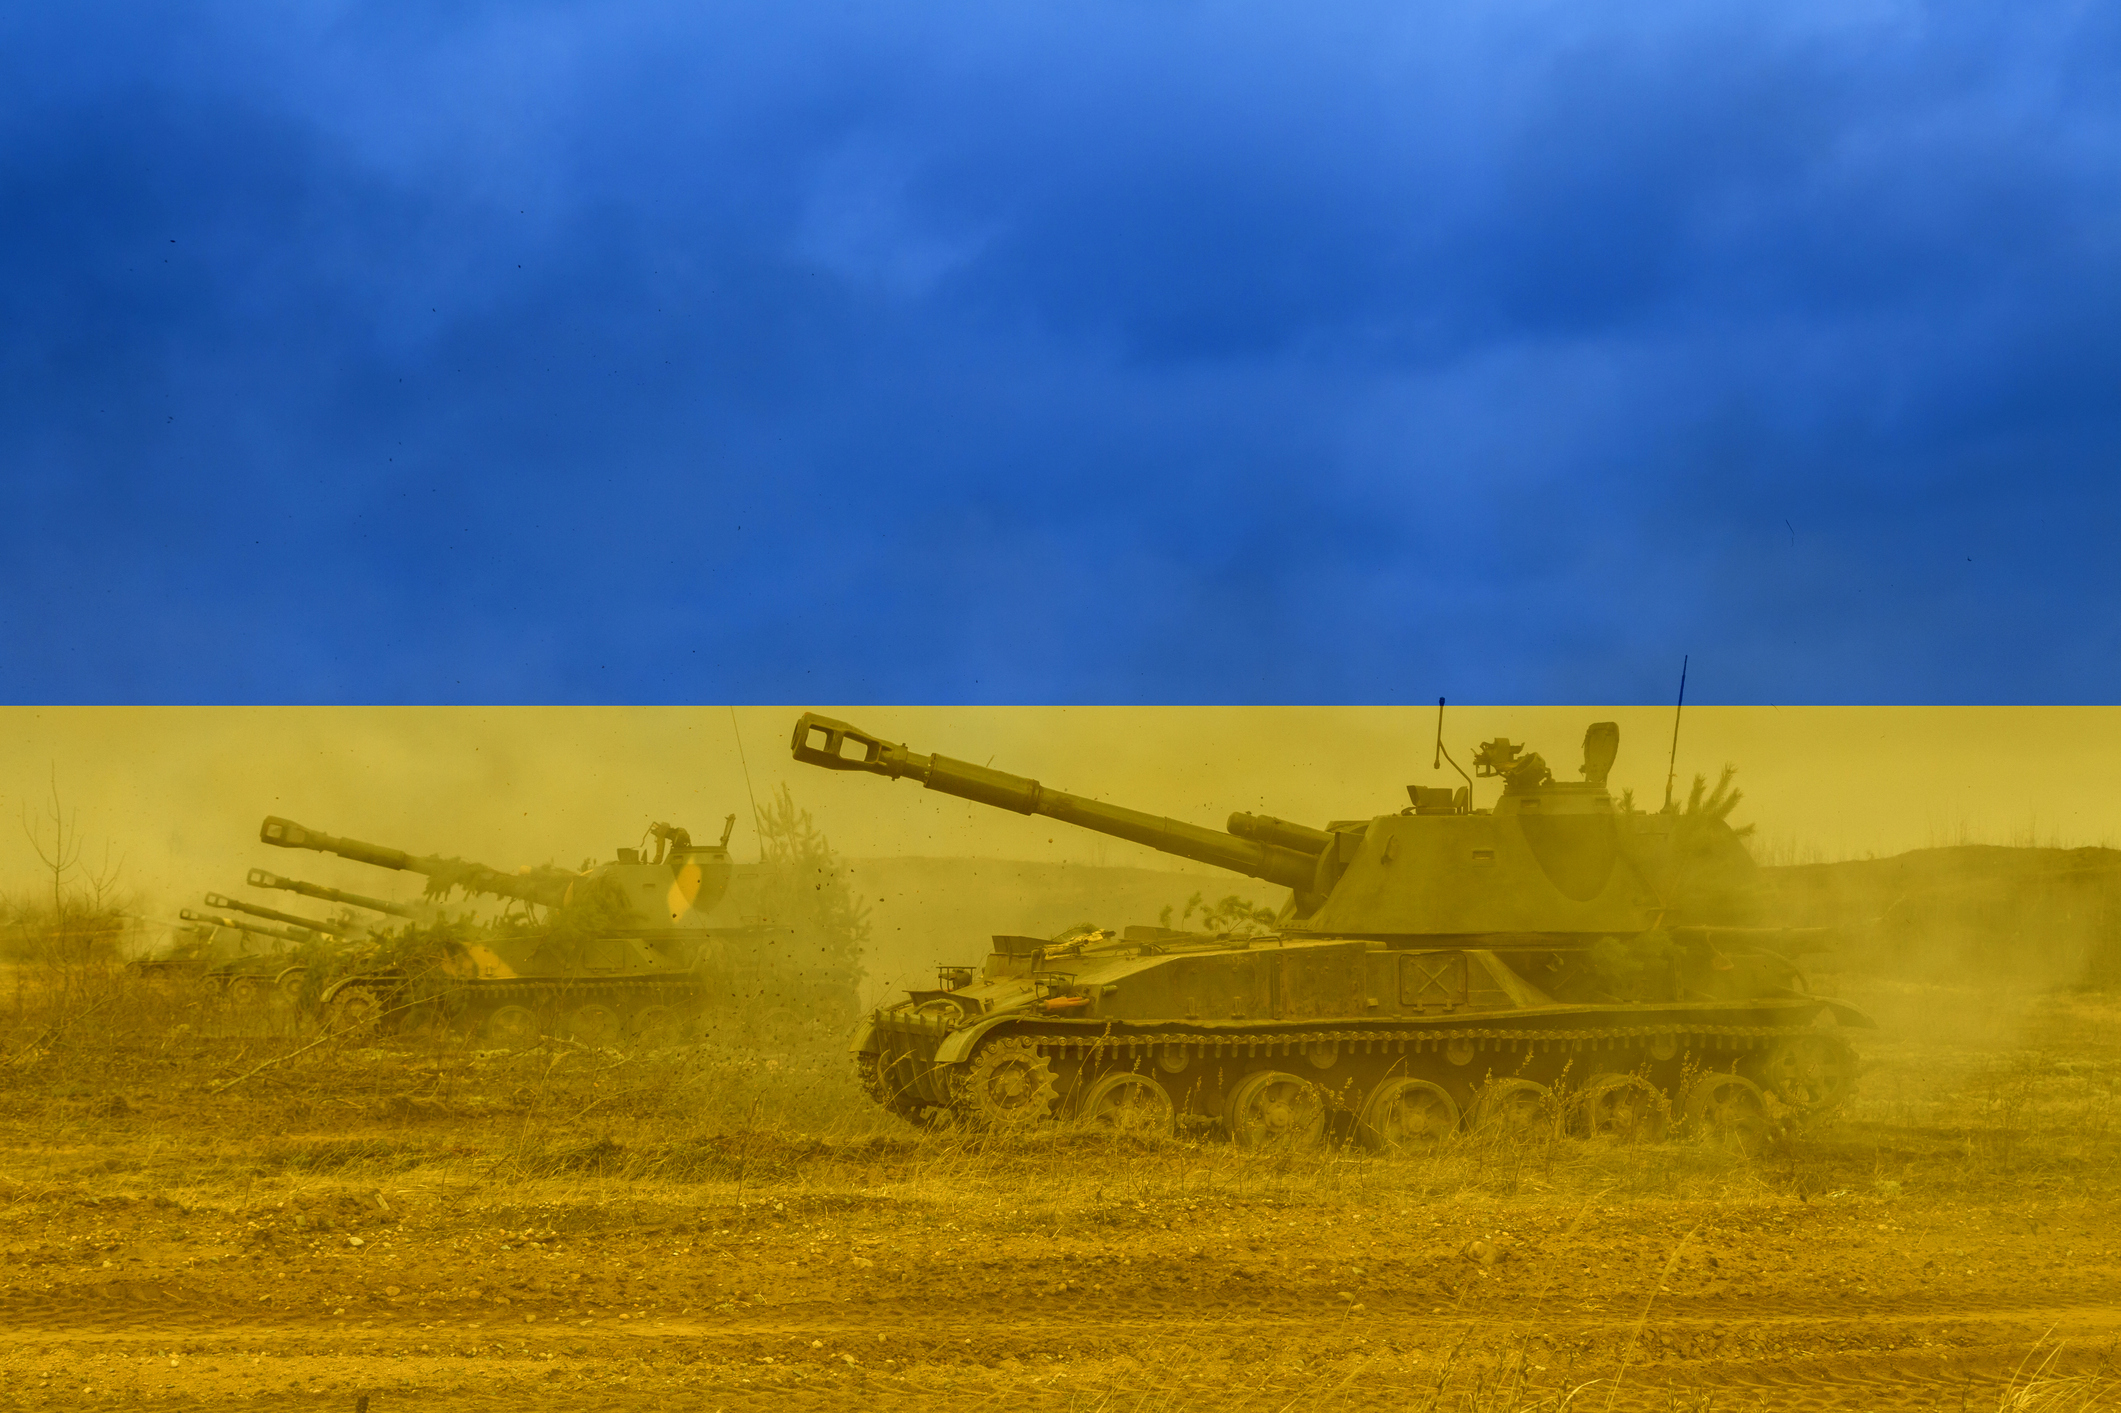 Russian invasion of Ukraine. Ukrainian flag